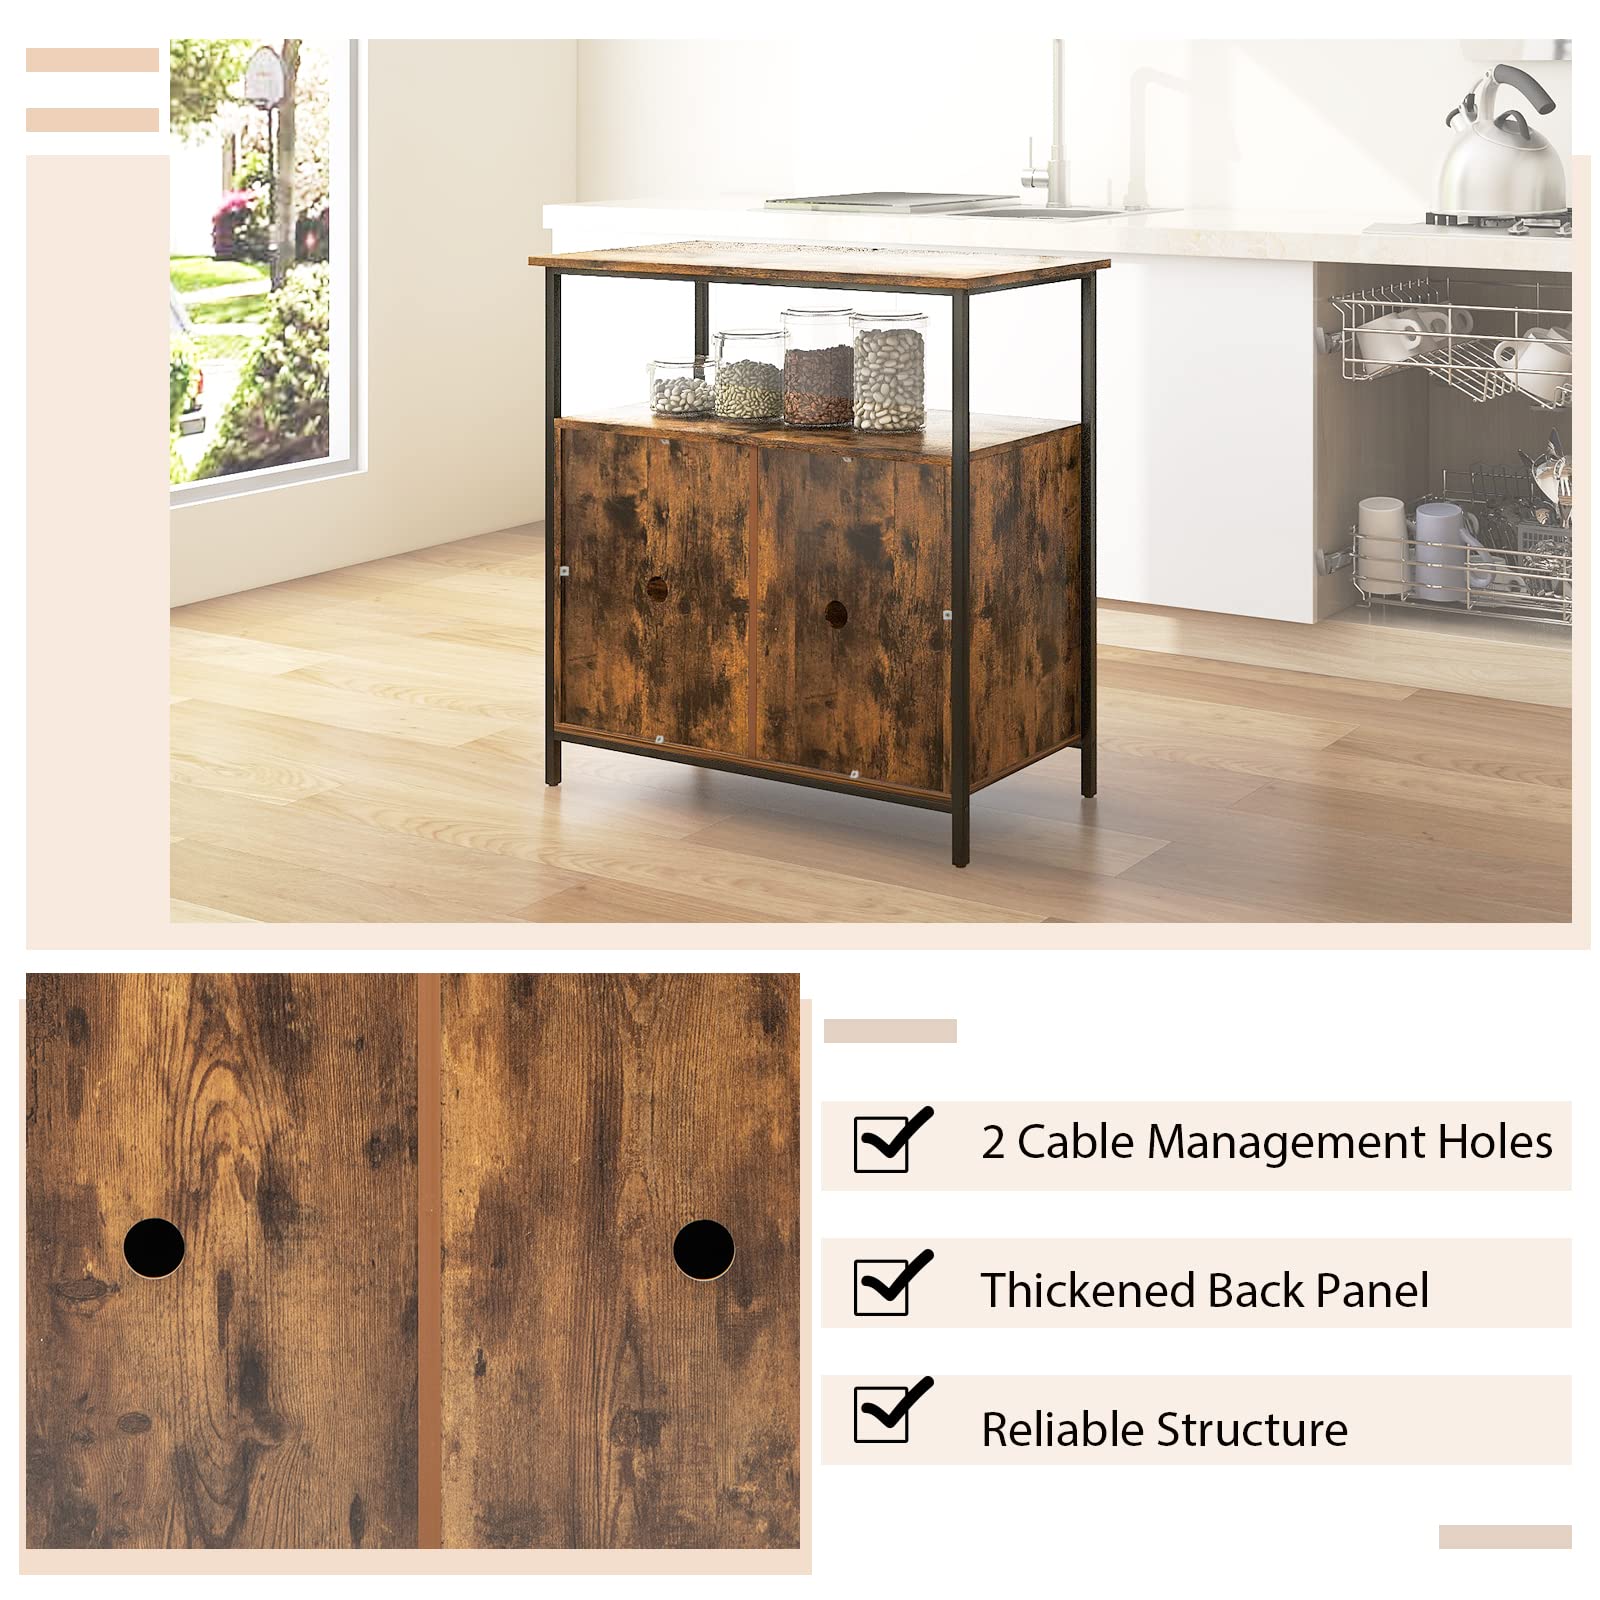 Giantex Buffet Cabinet with Shelf - 2 Door Sideboard Kitchen Storage Cupboard with Shelves (Rustic Brown)